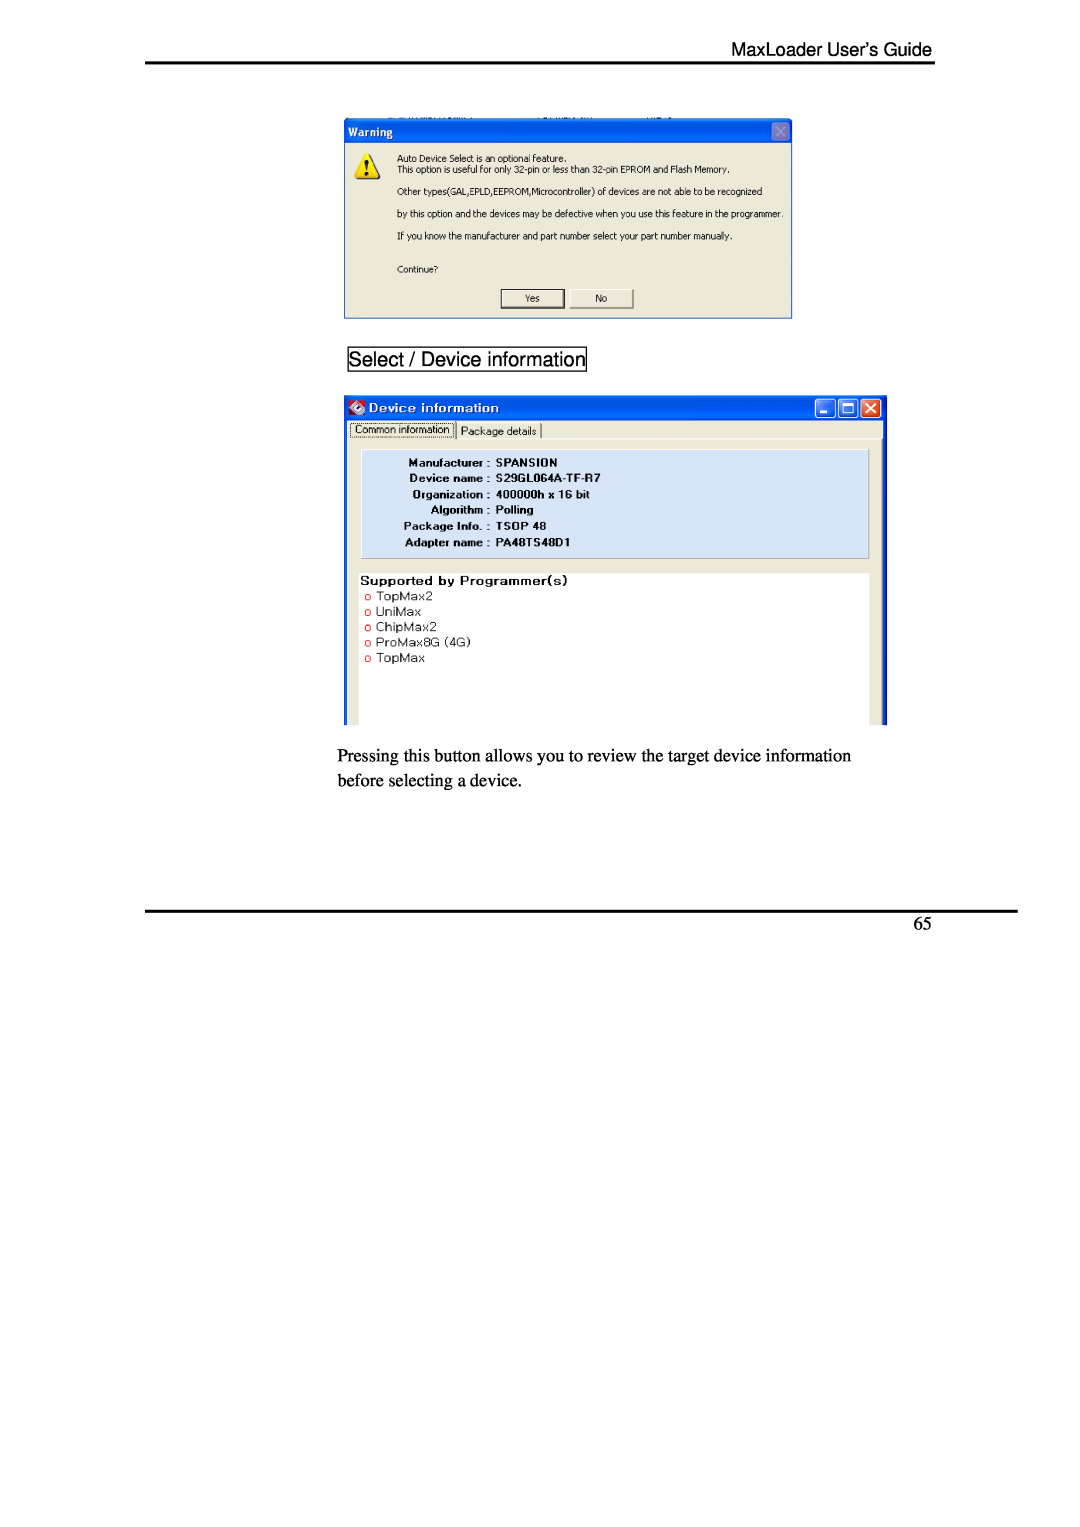 IBM manual Select / Device information, MaxLoader User’s Guide 